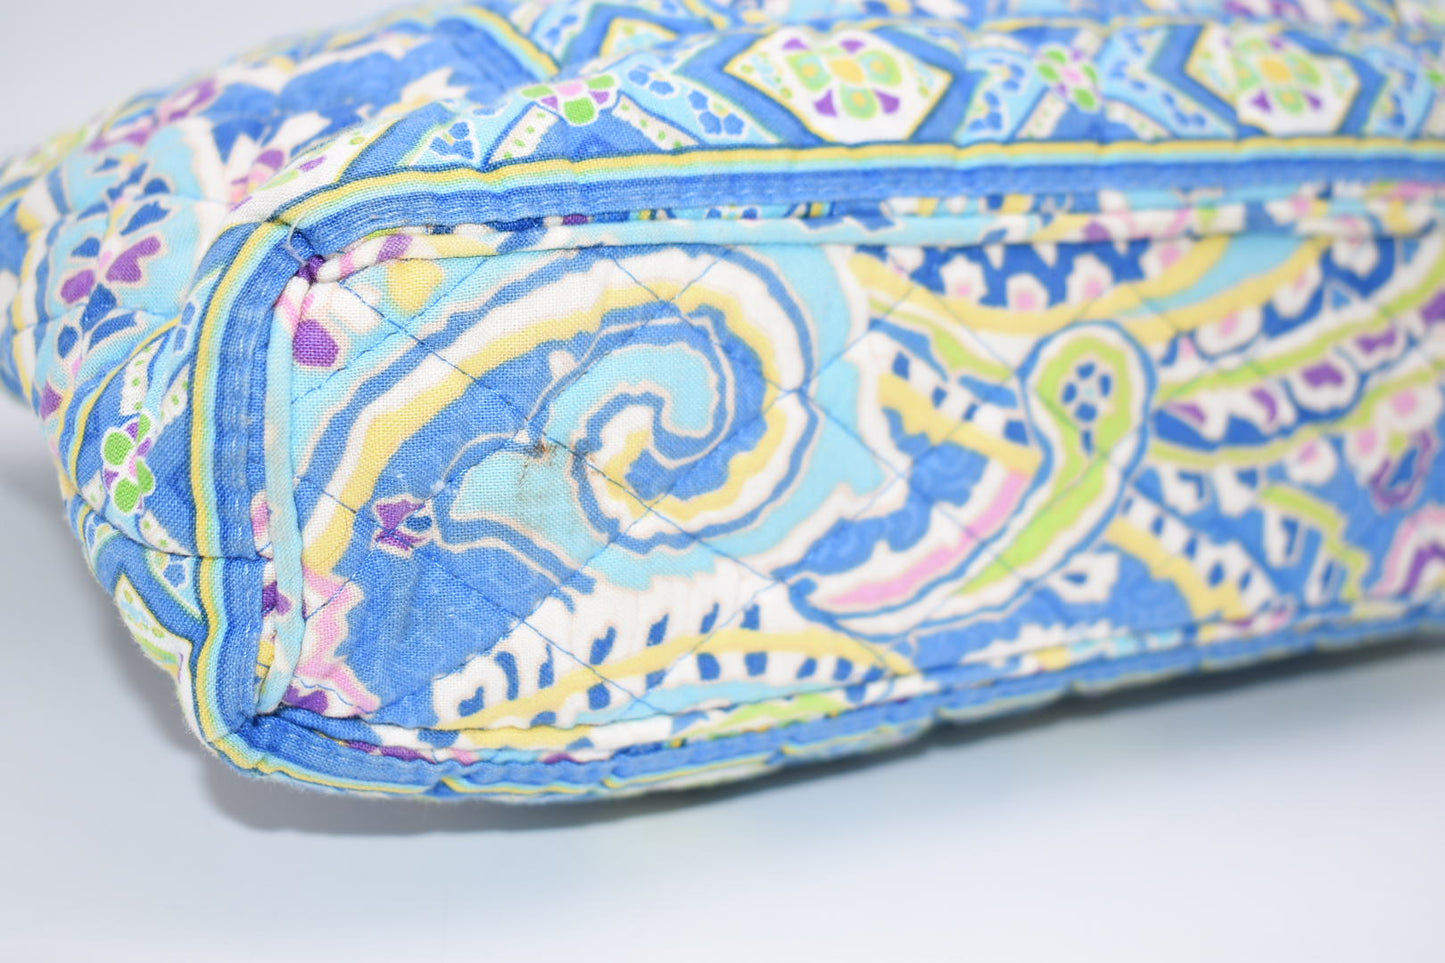 Vera Bradley Tic Tac Tote Bag in "Capri Blue" Pattern